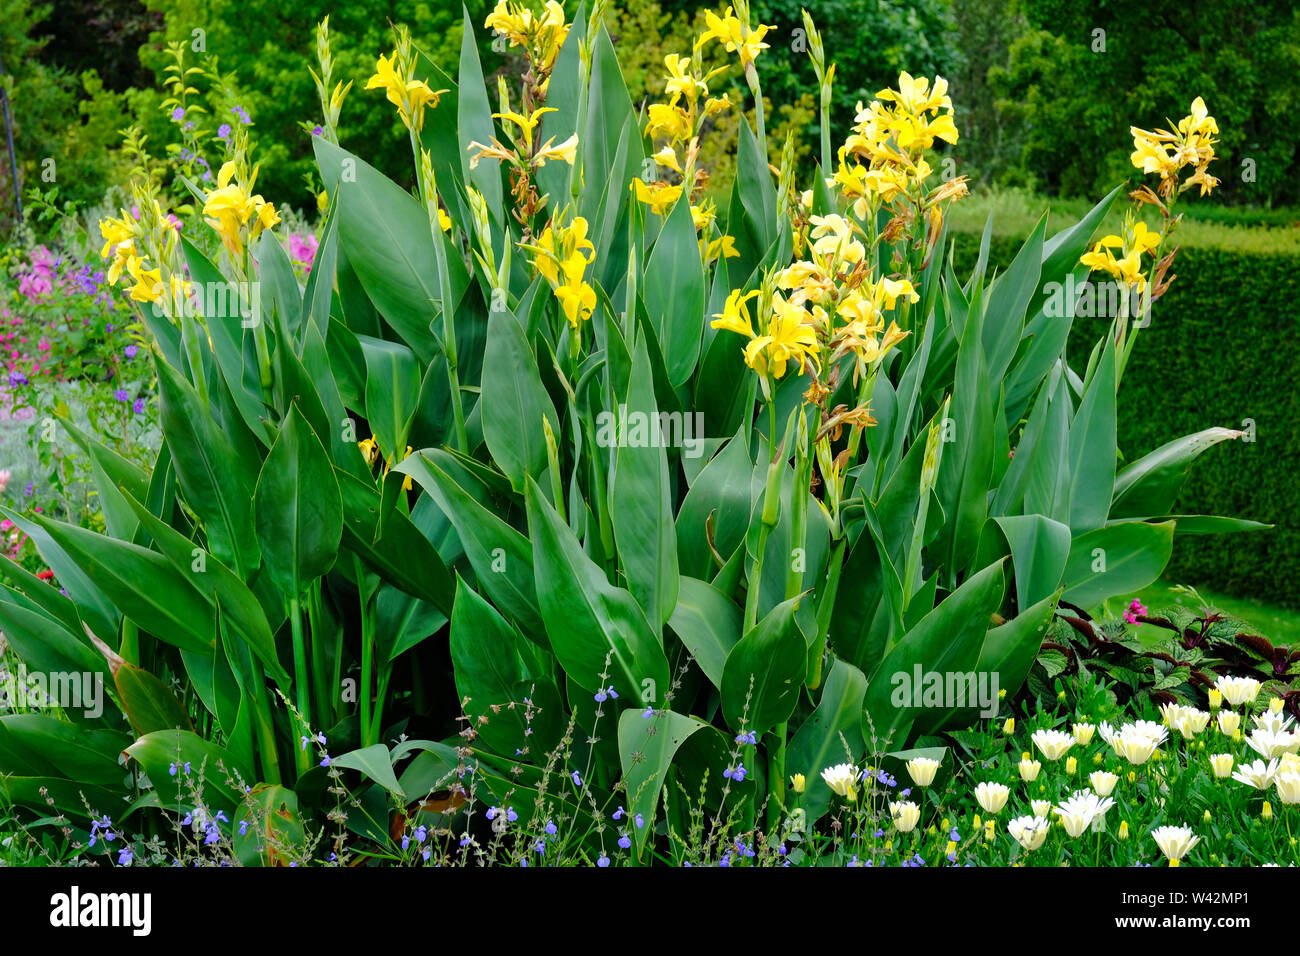 Yellow flowering cannas, UK - John Gollop Stock Photo